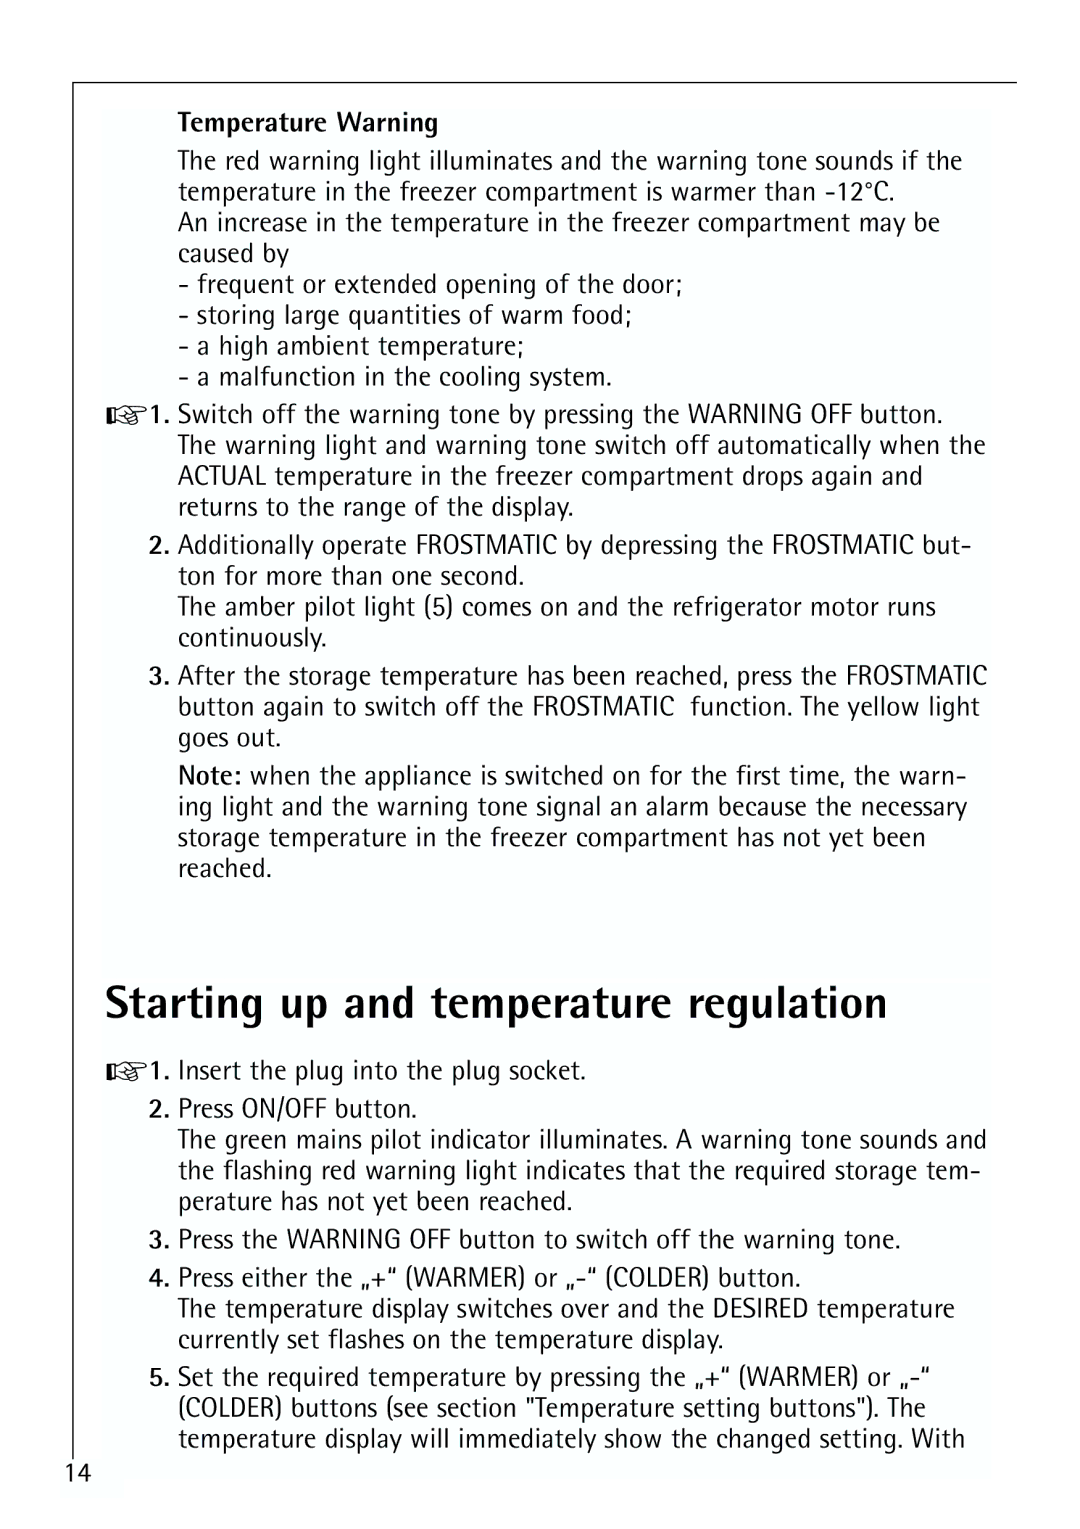 Electrolux ARCTIS 70110 manual Starting up and temperature regulation, Temperature Warning 